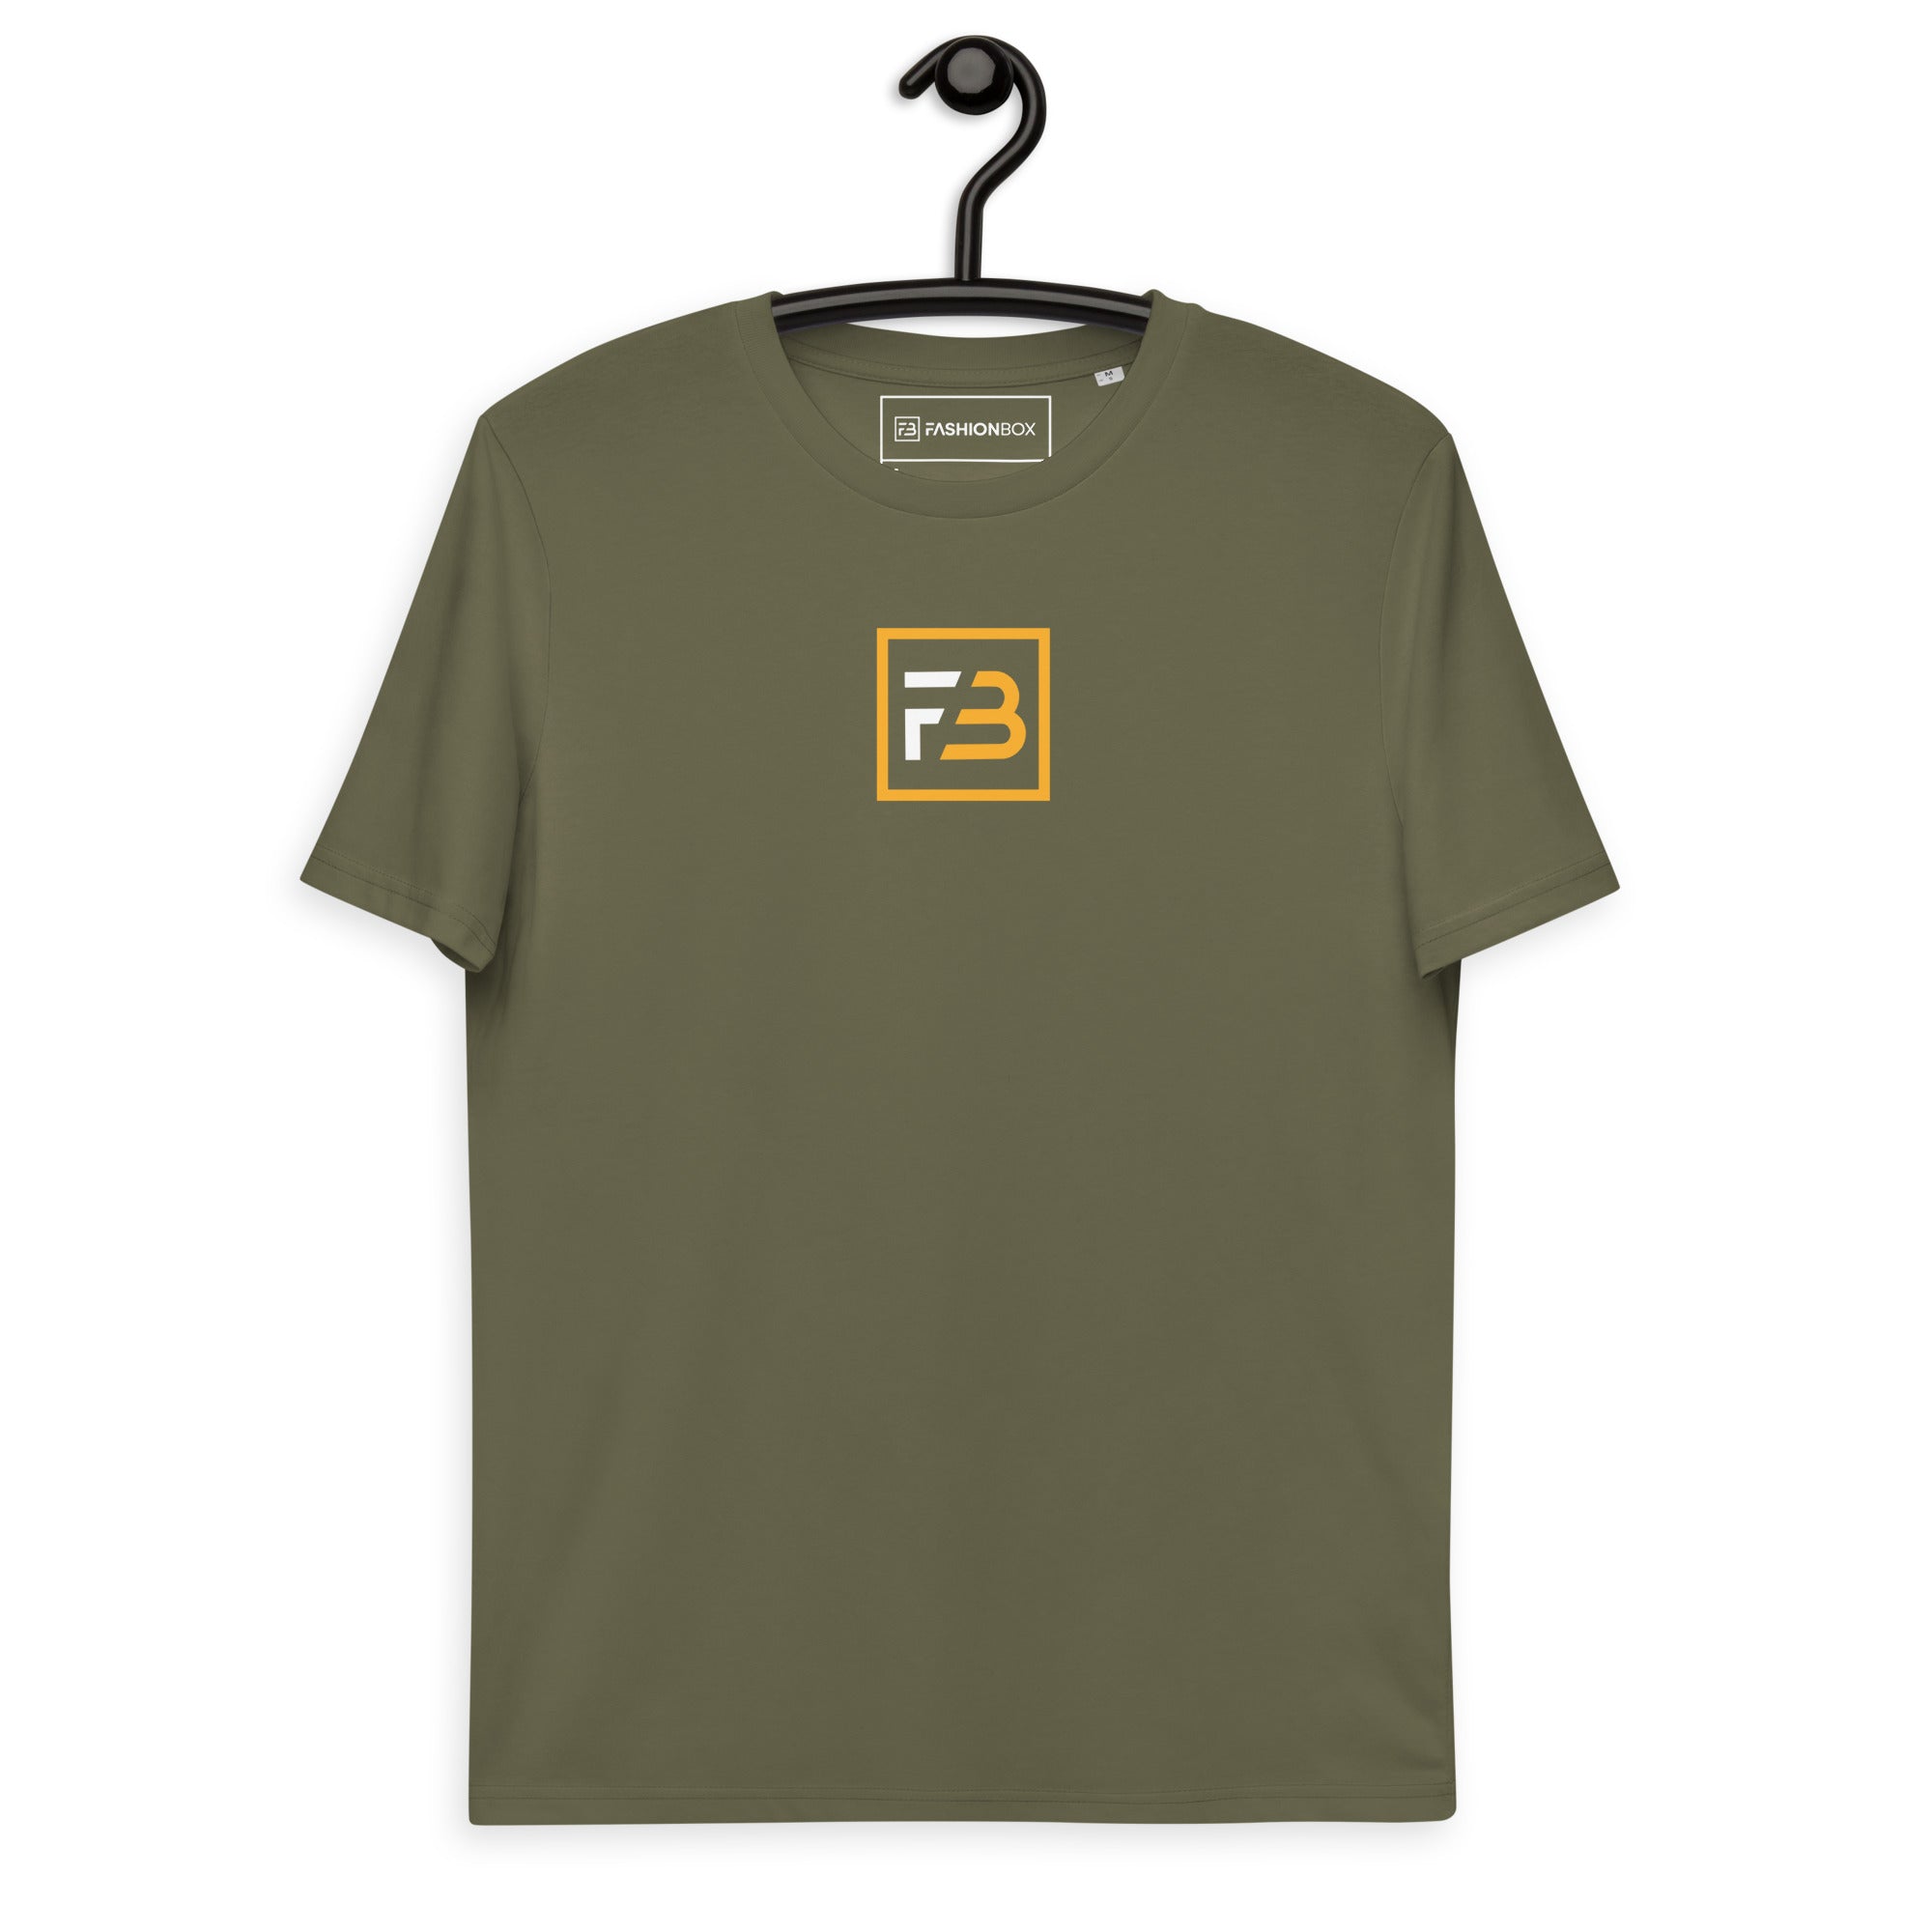 Basic cotton FB logo t-shirt